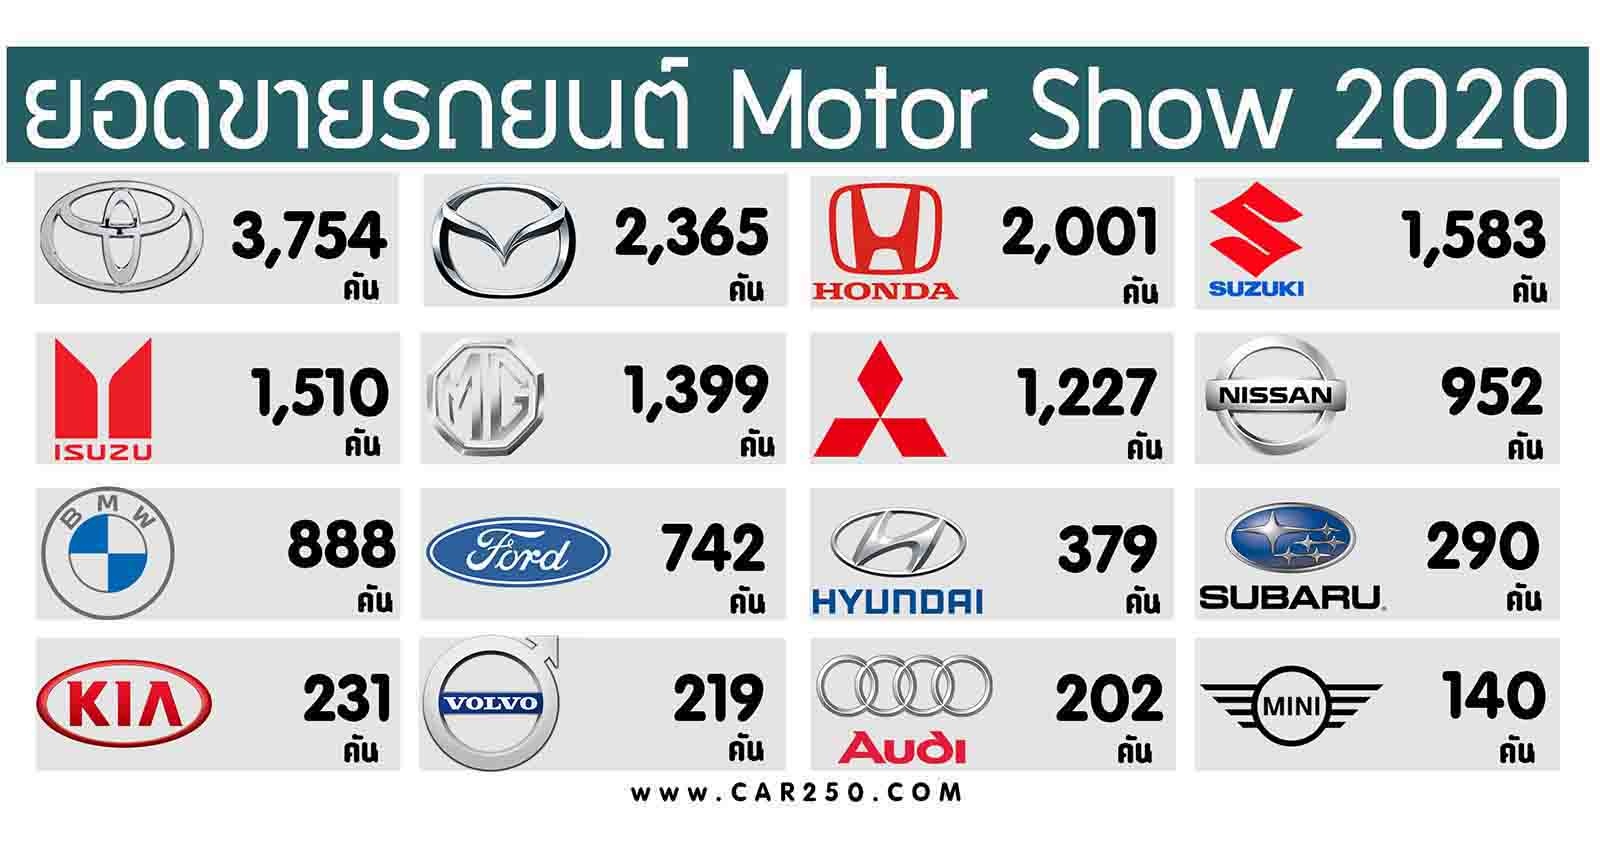 TOYOTA นำยอดขายรถยนต์ Motor Show 2020 รวม 18,381 คัน